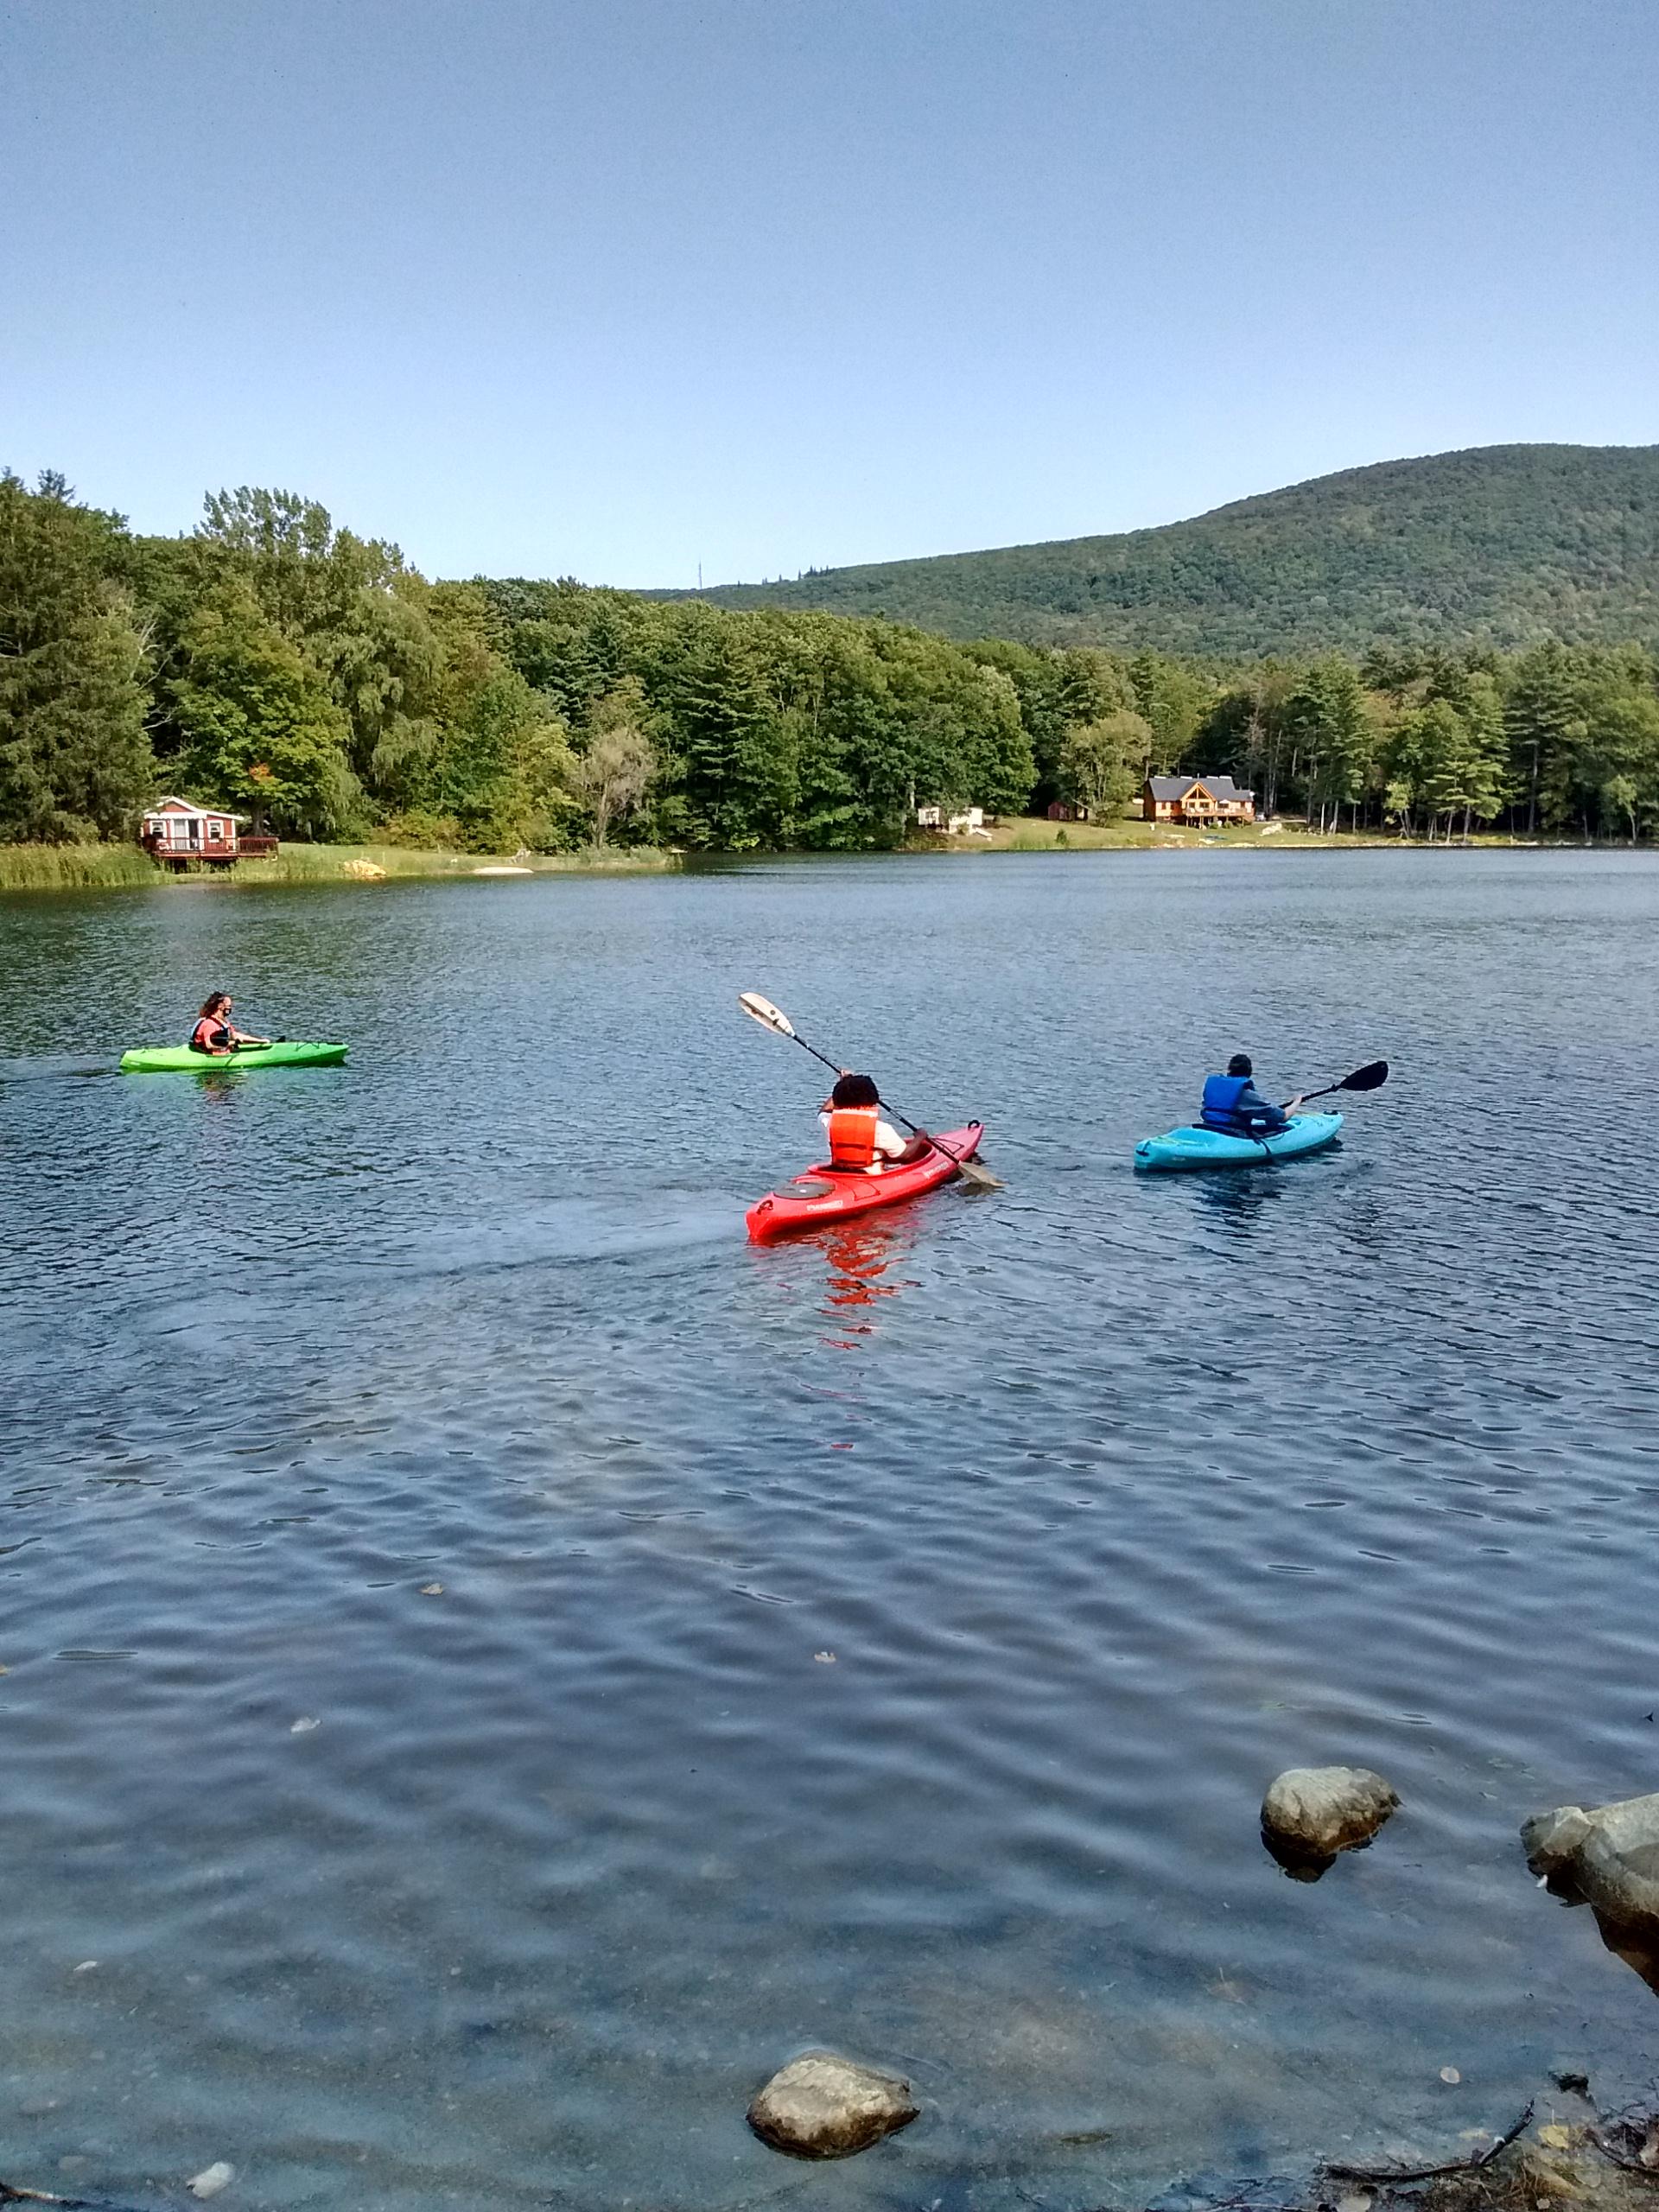 MCLA students kayak at Windsor Lake in North Adams.